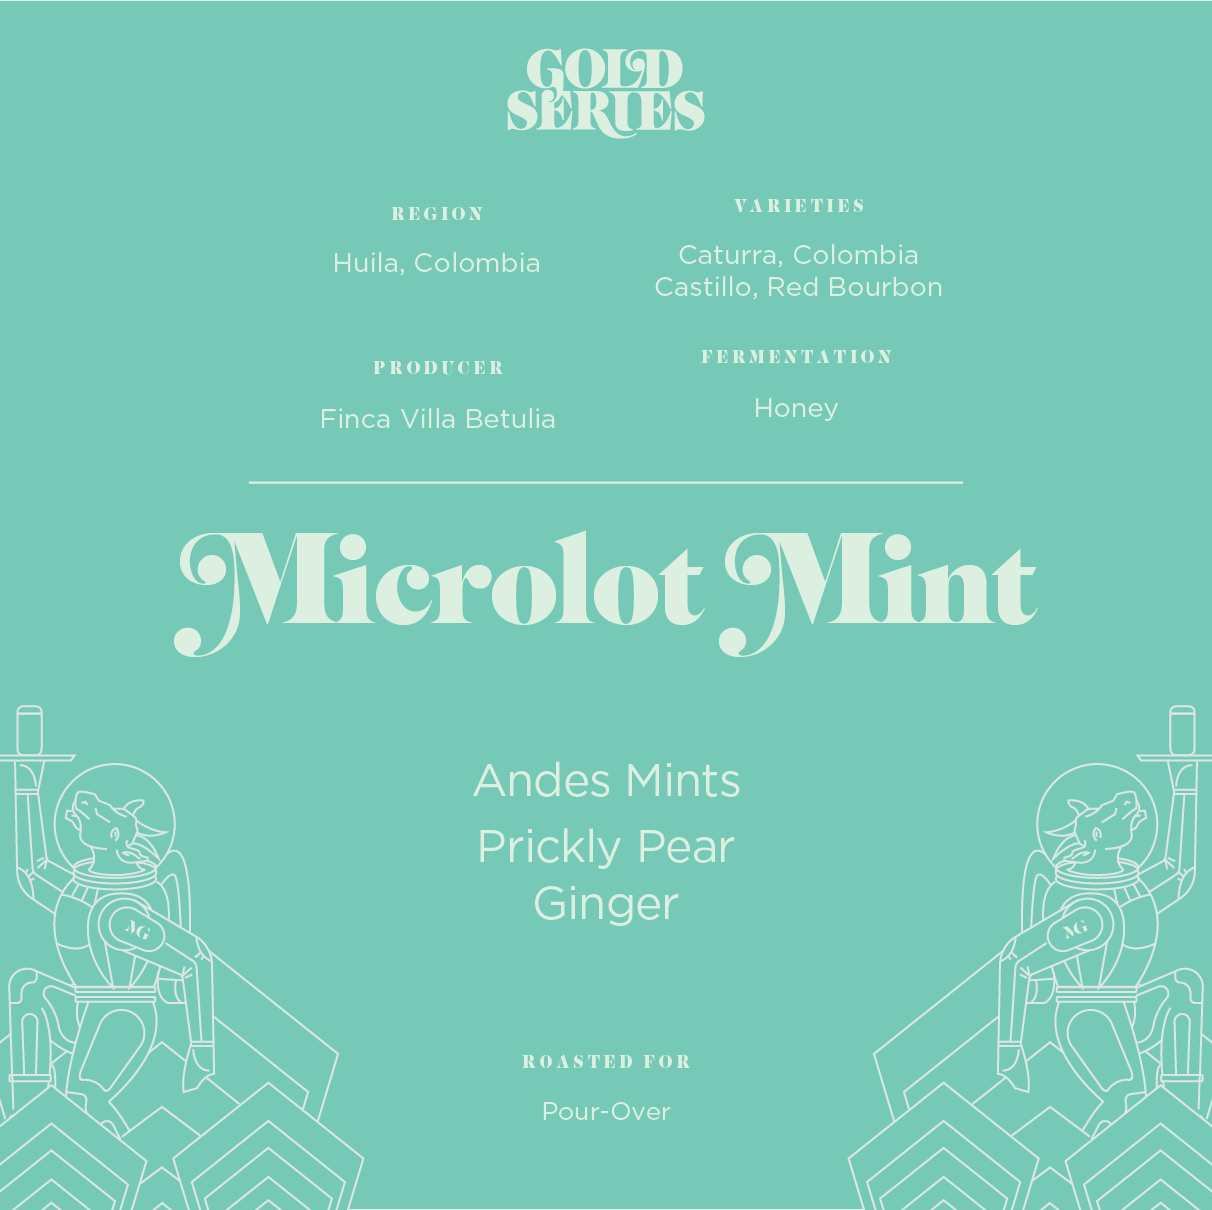 Gold Series: Microlot Mint